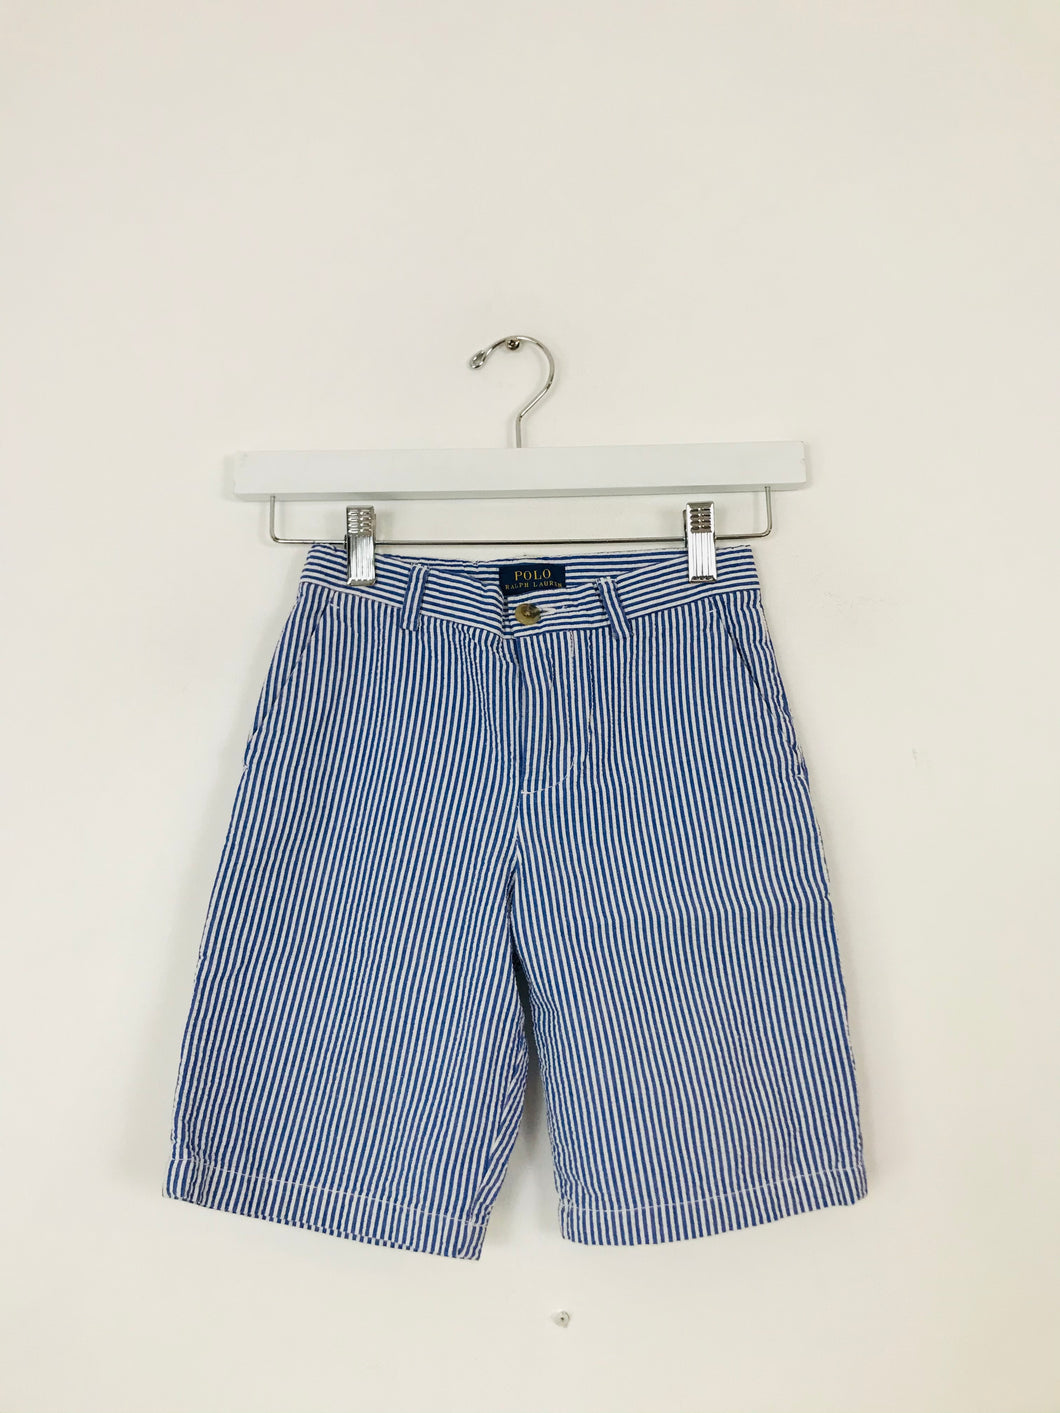 Polo Ralph Lauren Kid’s Striped Shorts | Age 7 | Blue